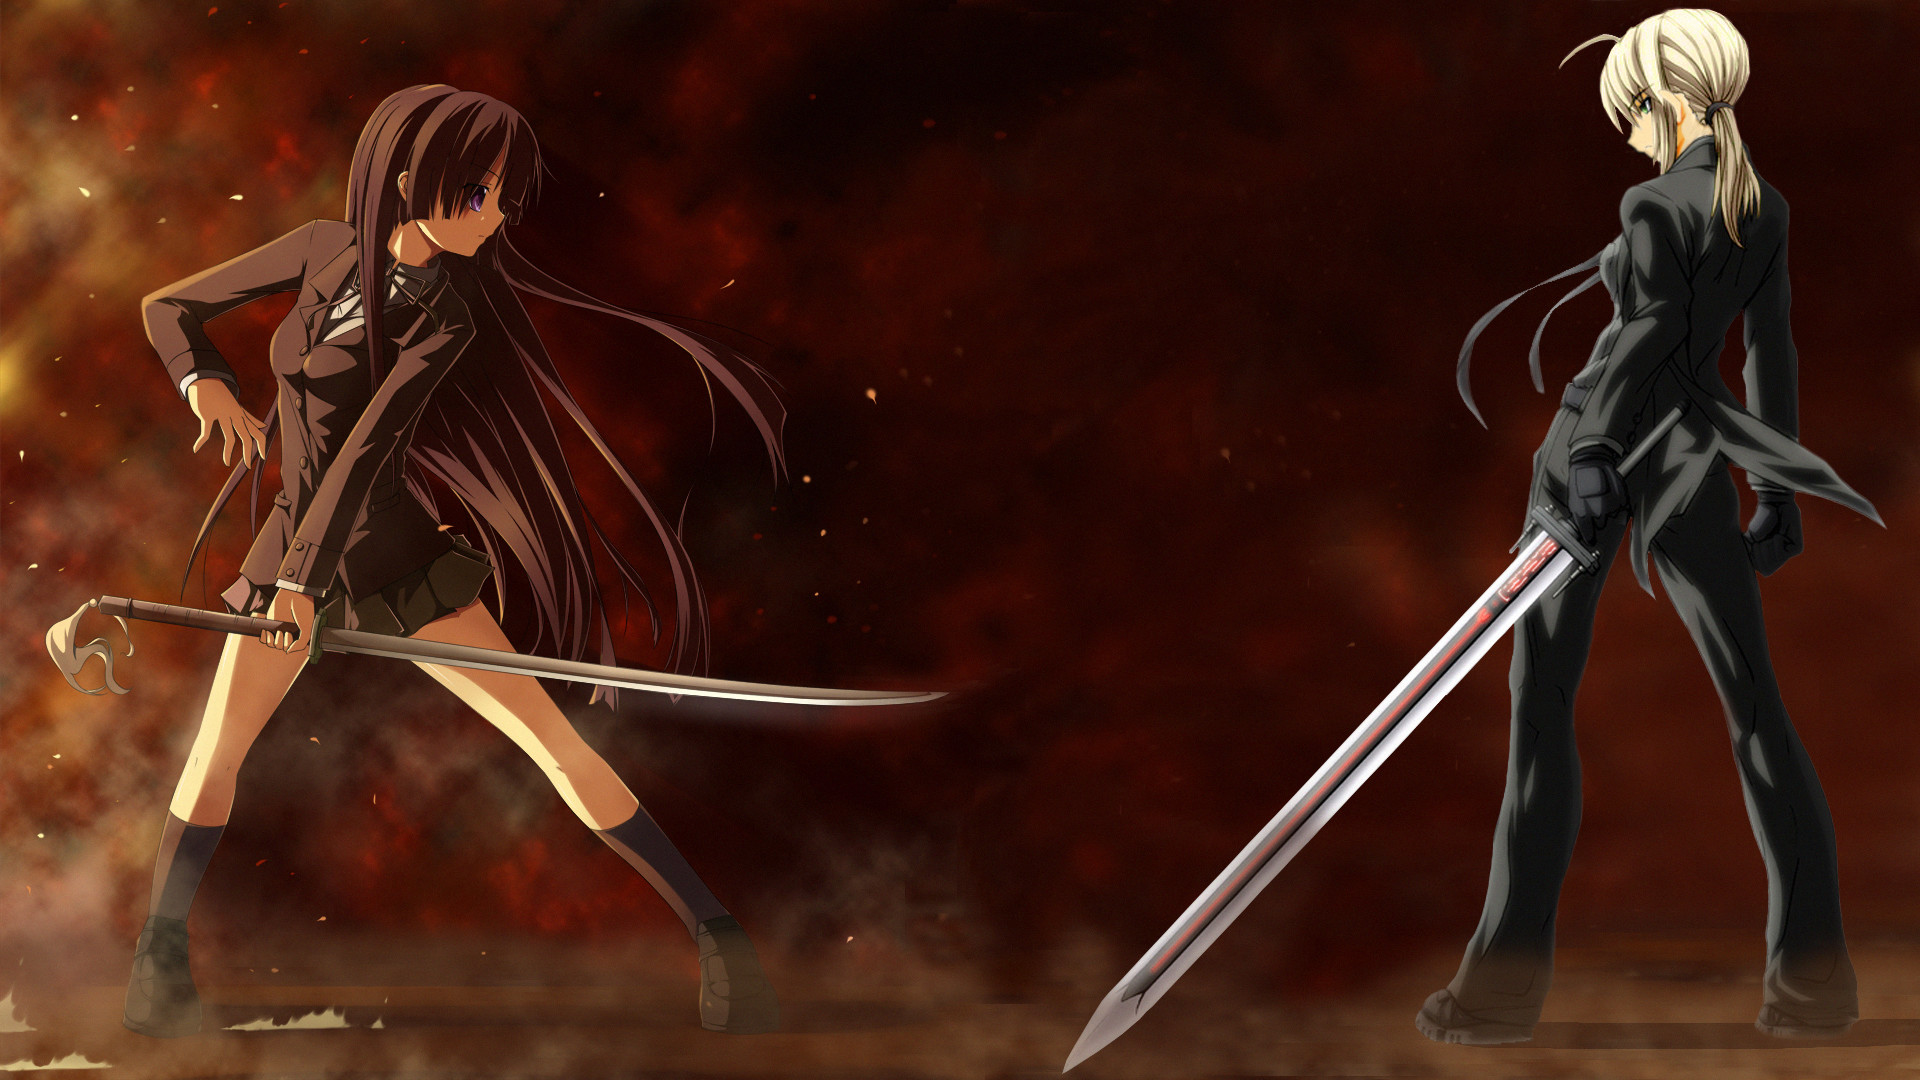 1920x1080 Anime - Crossover Girl Sword Showdown Fate/Stay Night K-ON! Mio Akiyama